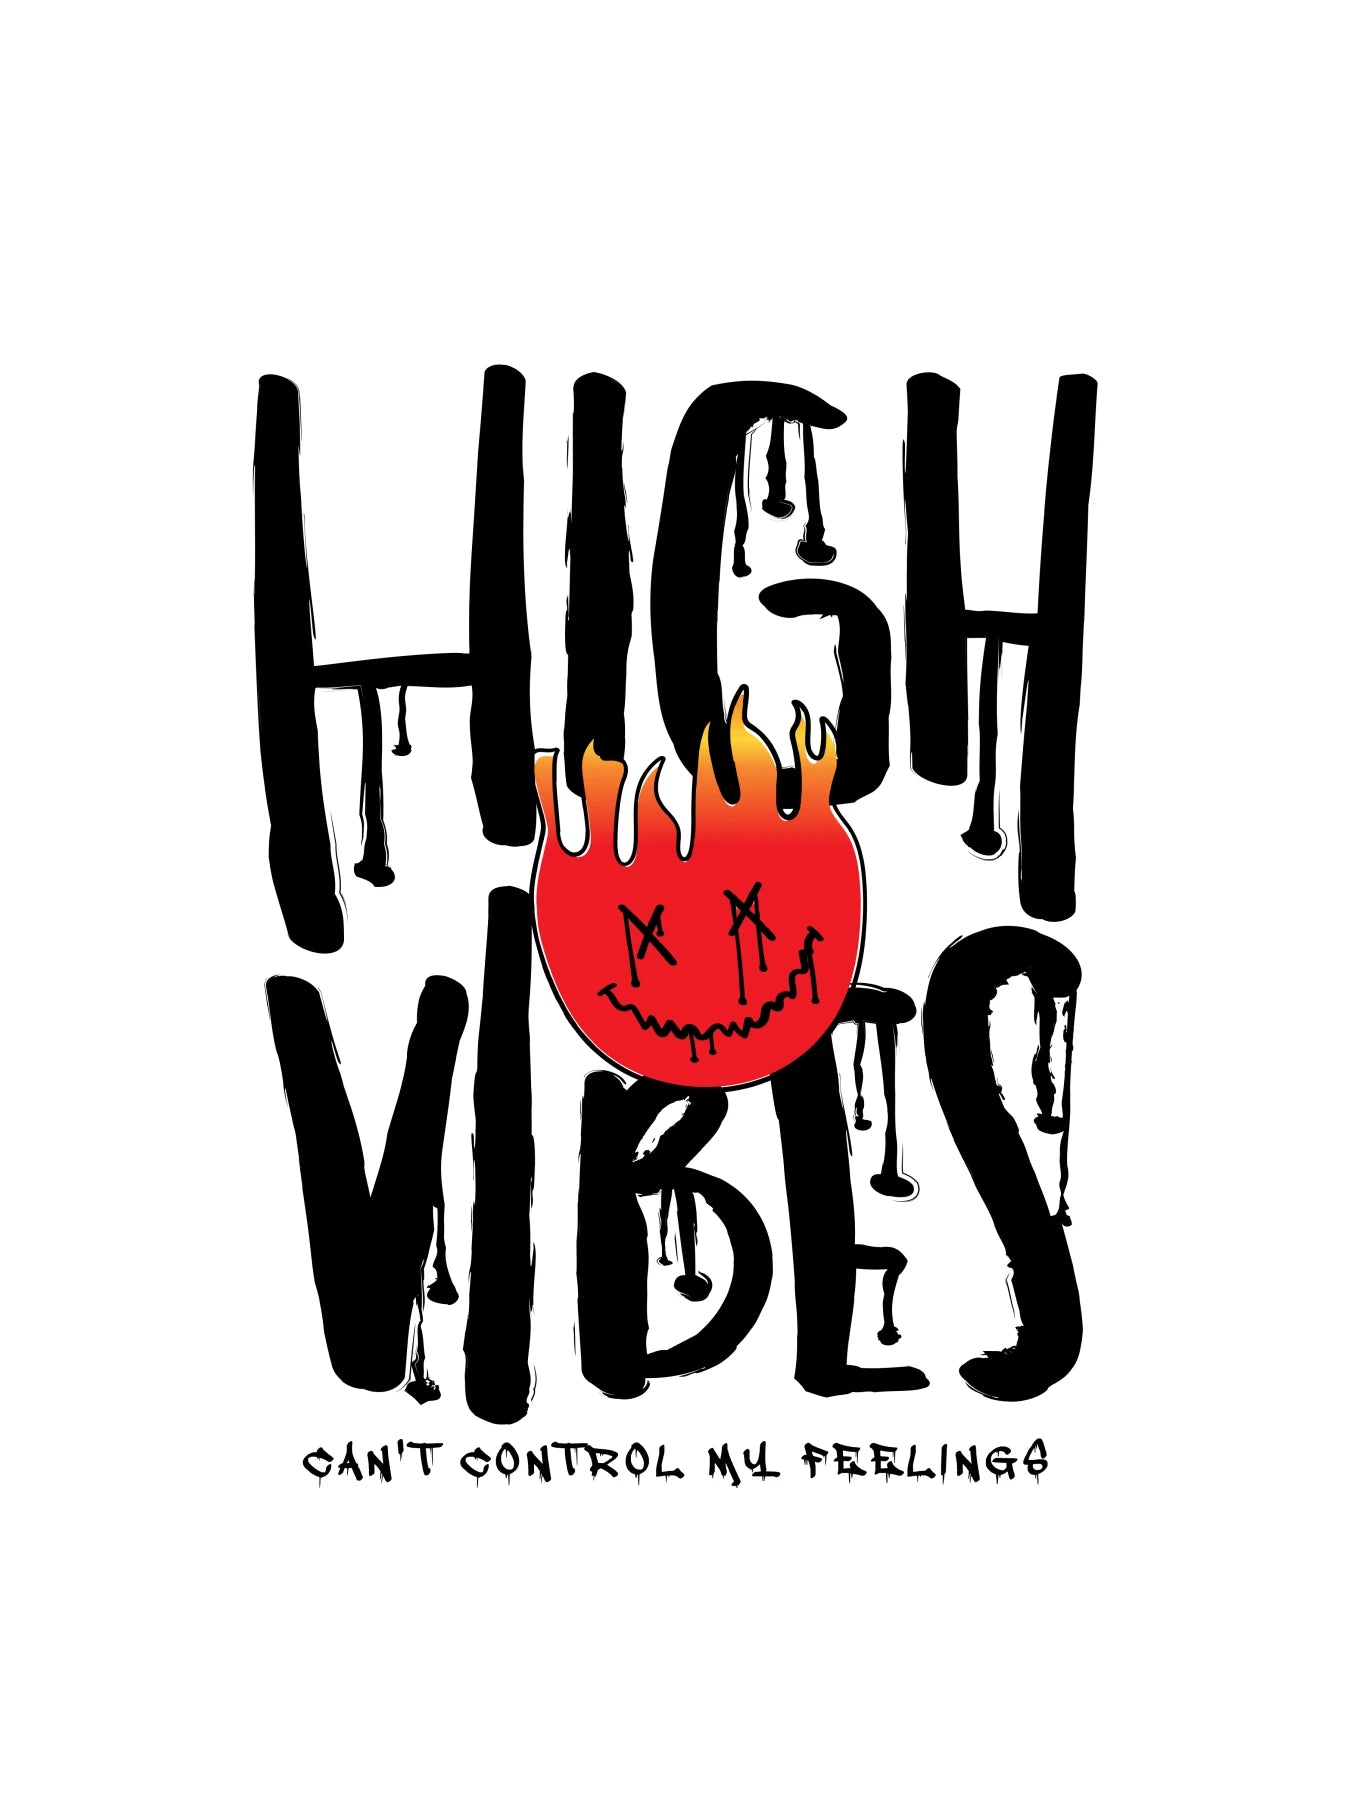 High Vibes